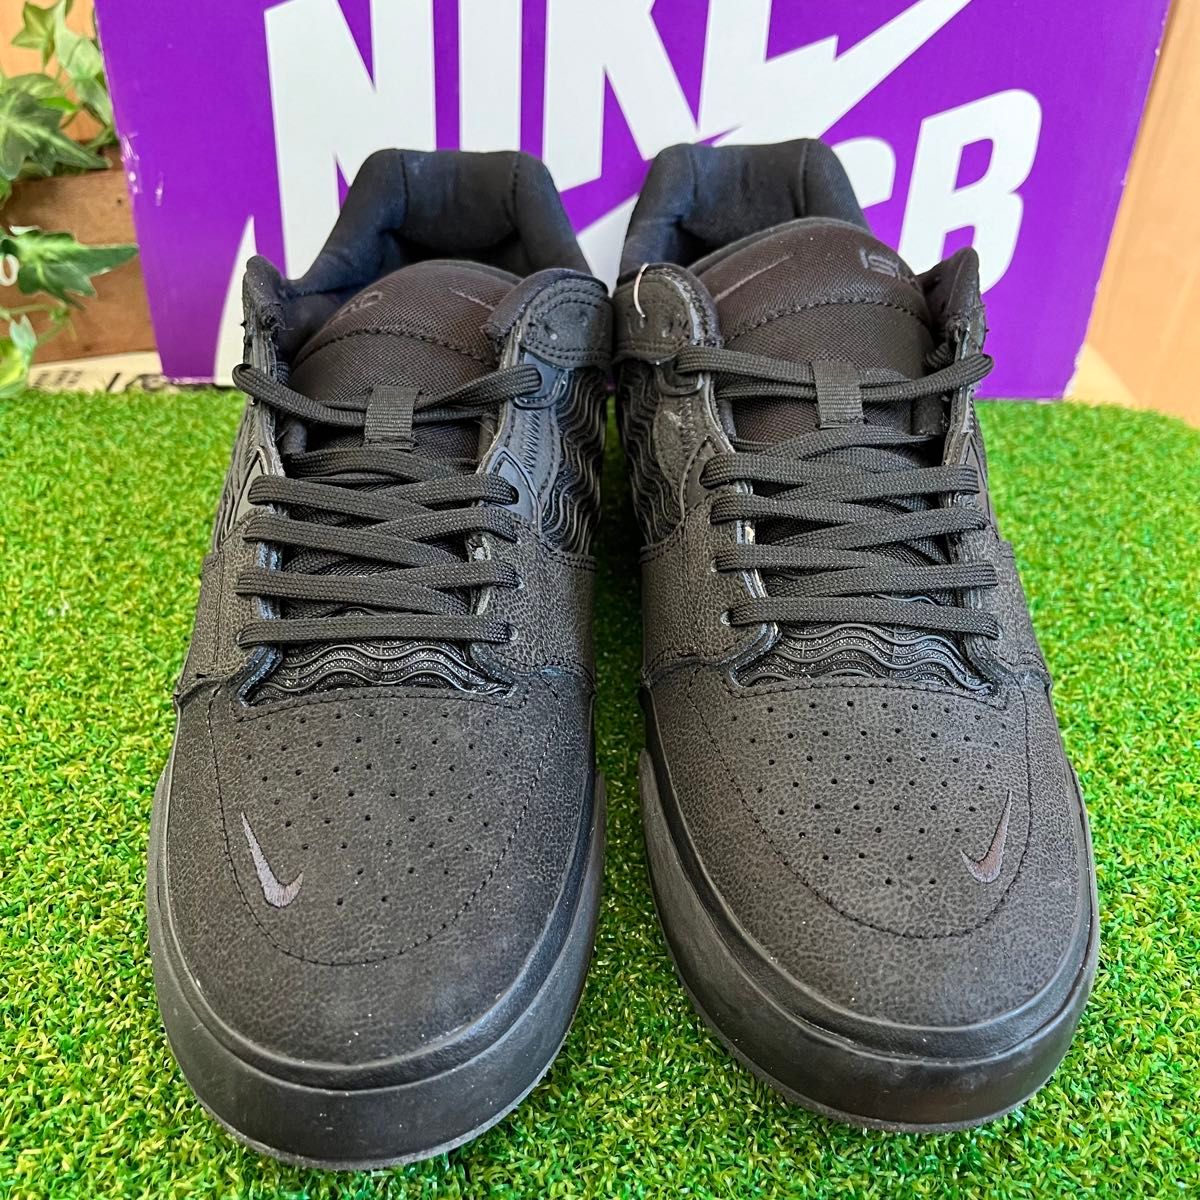 Nike SB Ishod Wair Premium "Black" 27cm